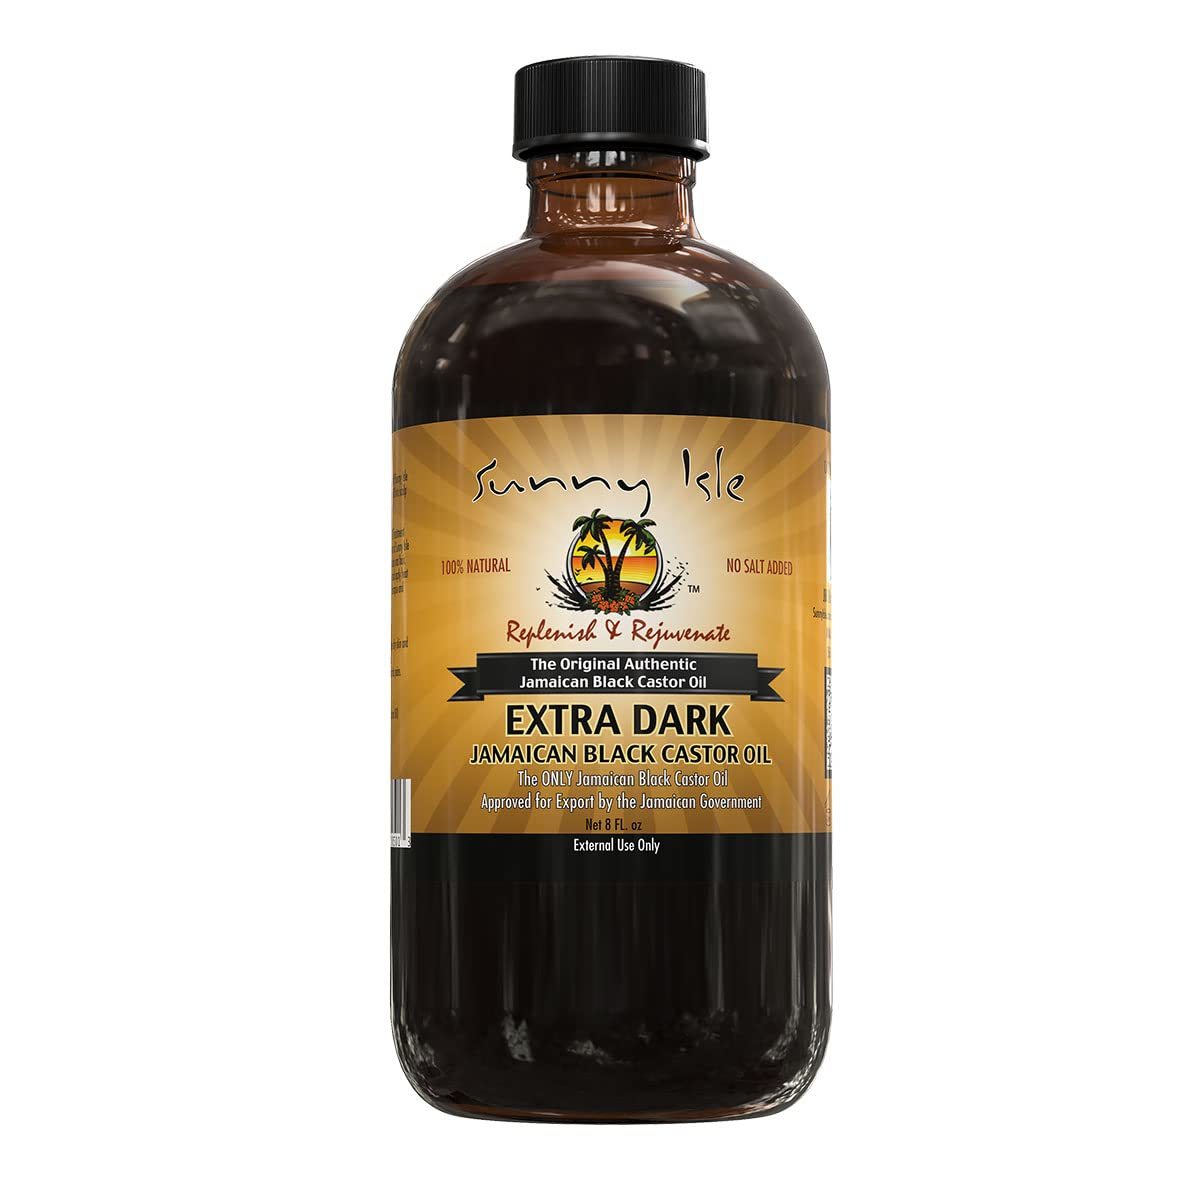 Sunny Isle Extra Dark Jamaican Black Castor Oil, 8 fl. oz. | 100% Natural High P